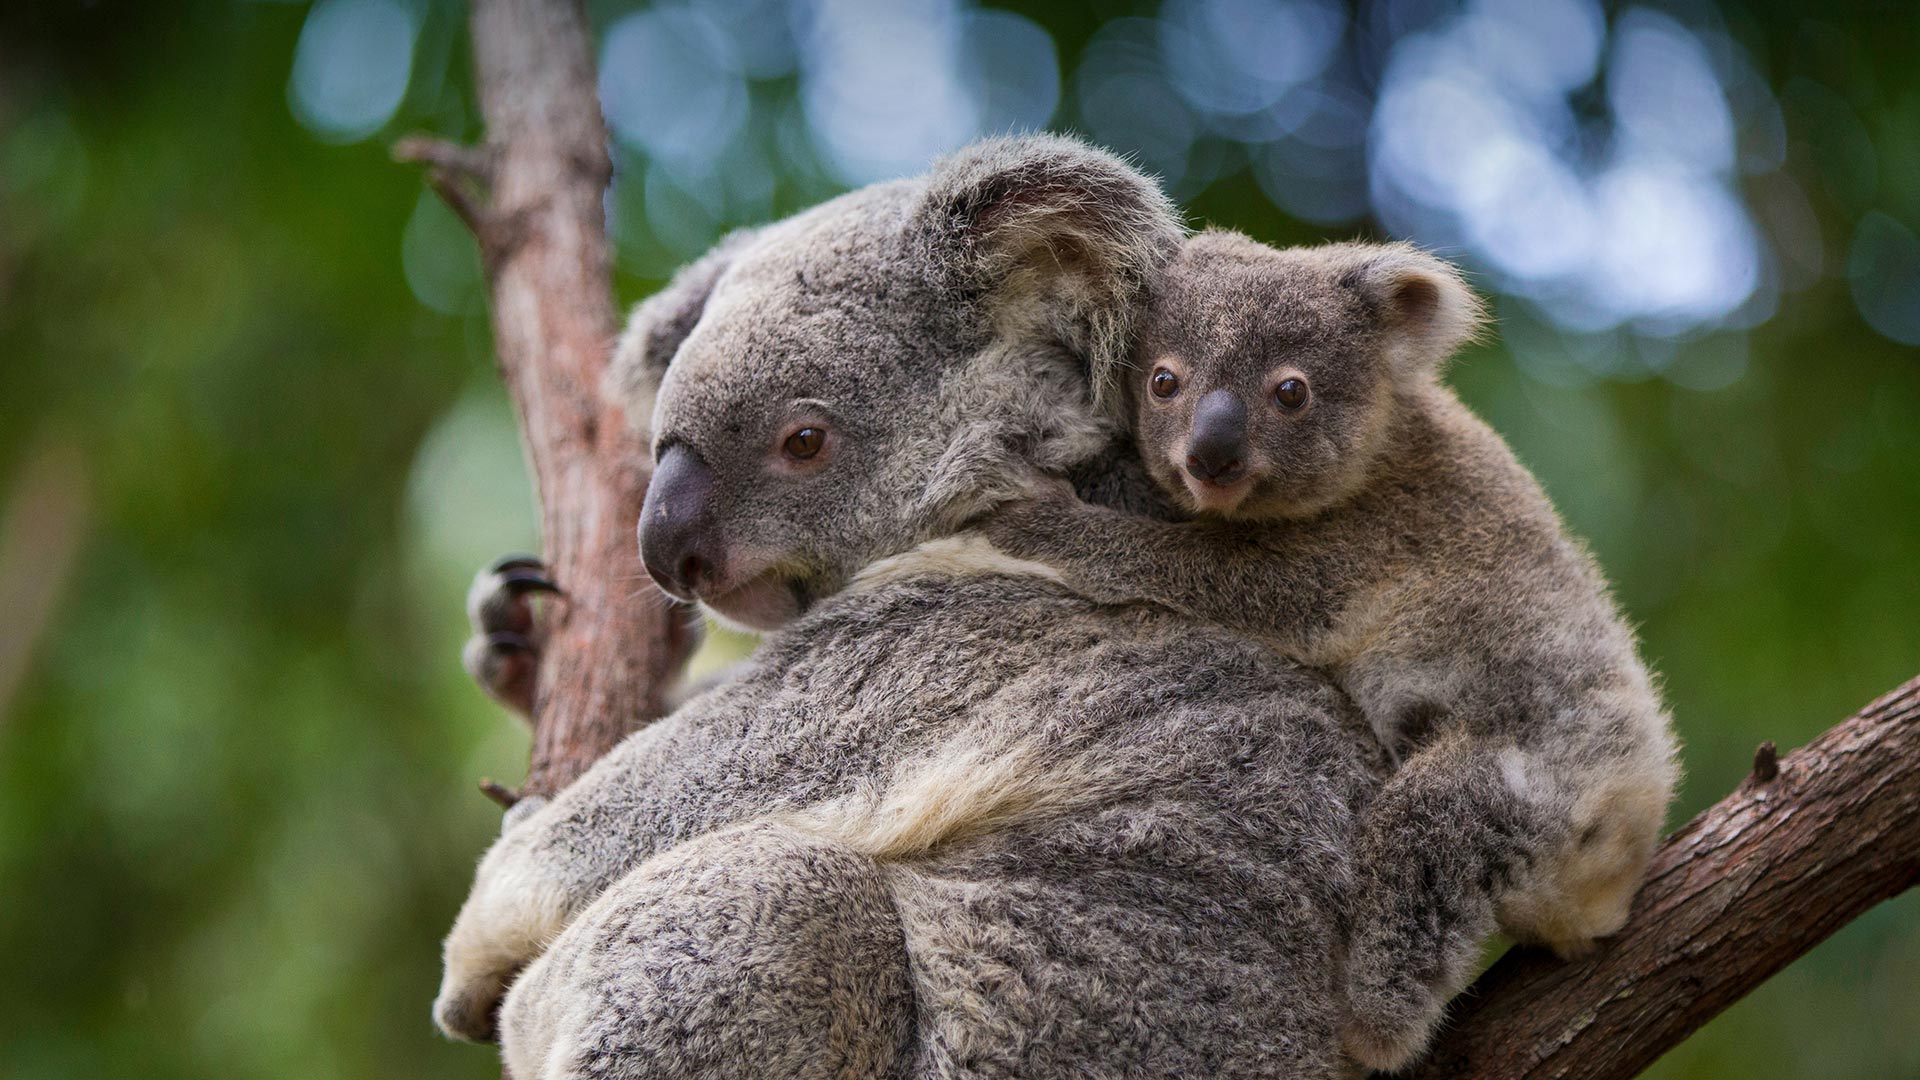 Koala mother and 8-month-old joey, Queensland, Australia - Suzi Eszterhas